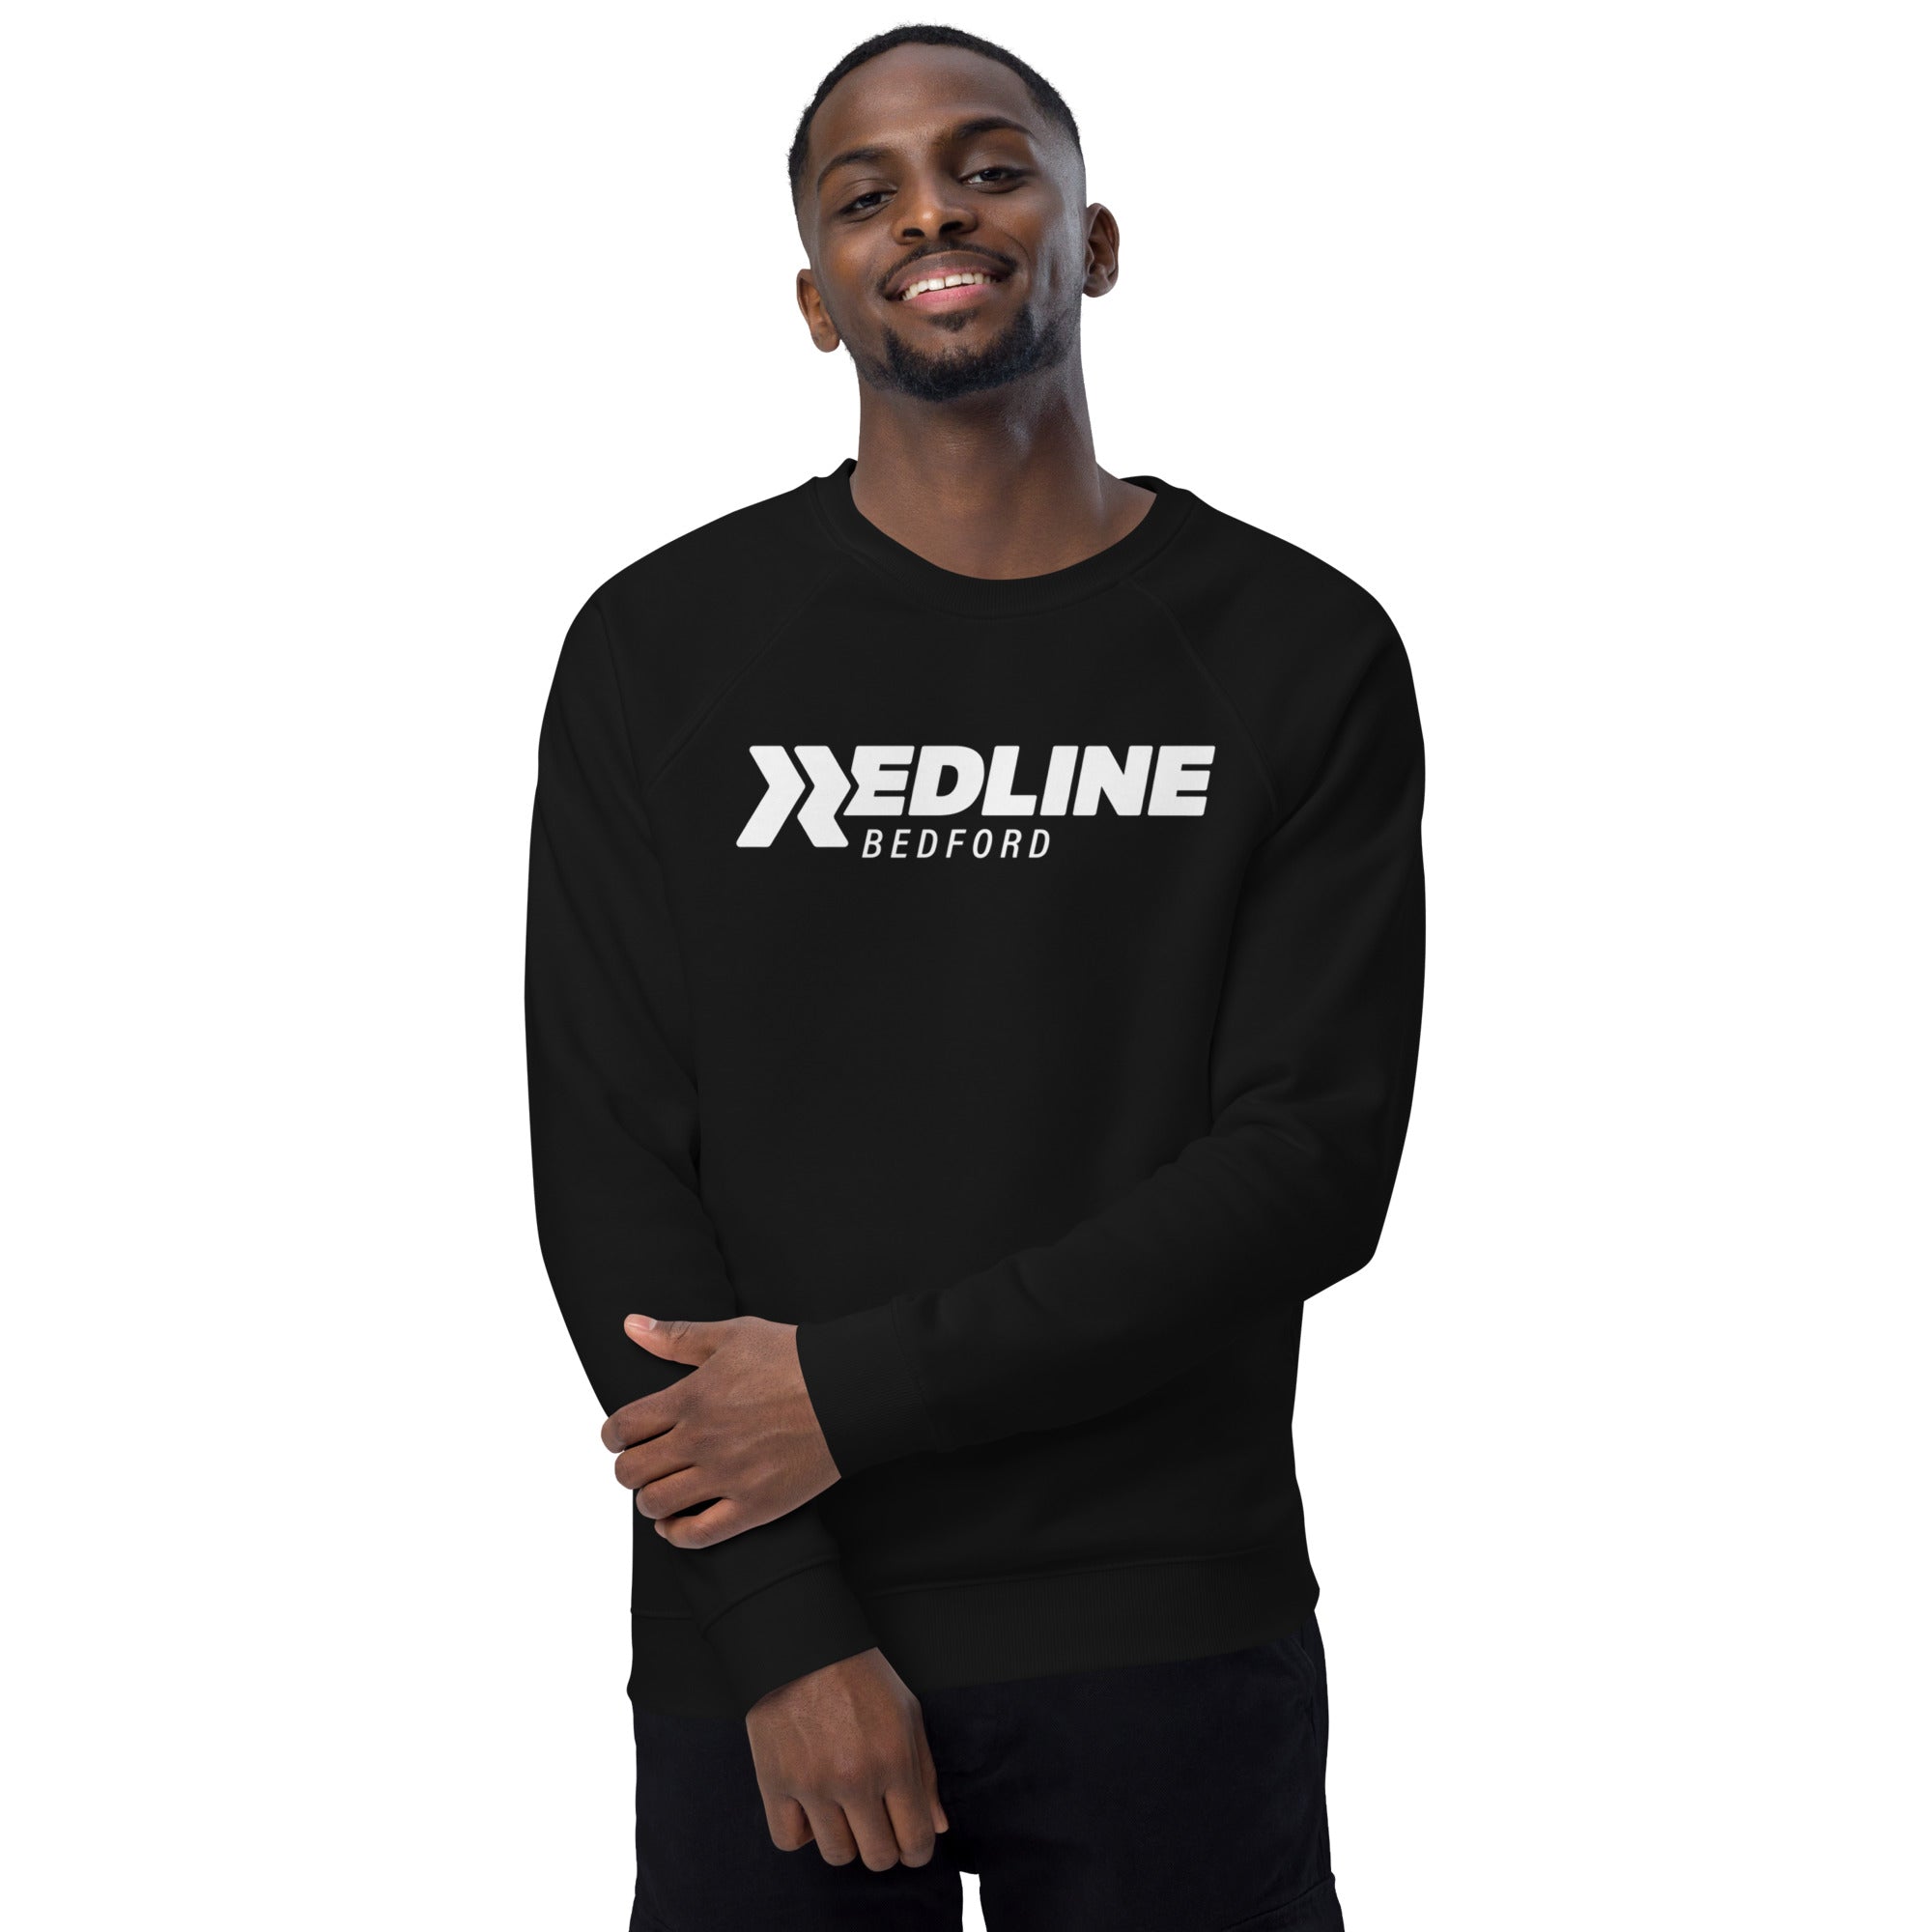 Bedford Logo White - Black Unisex organic raglan sweatshirt